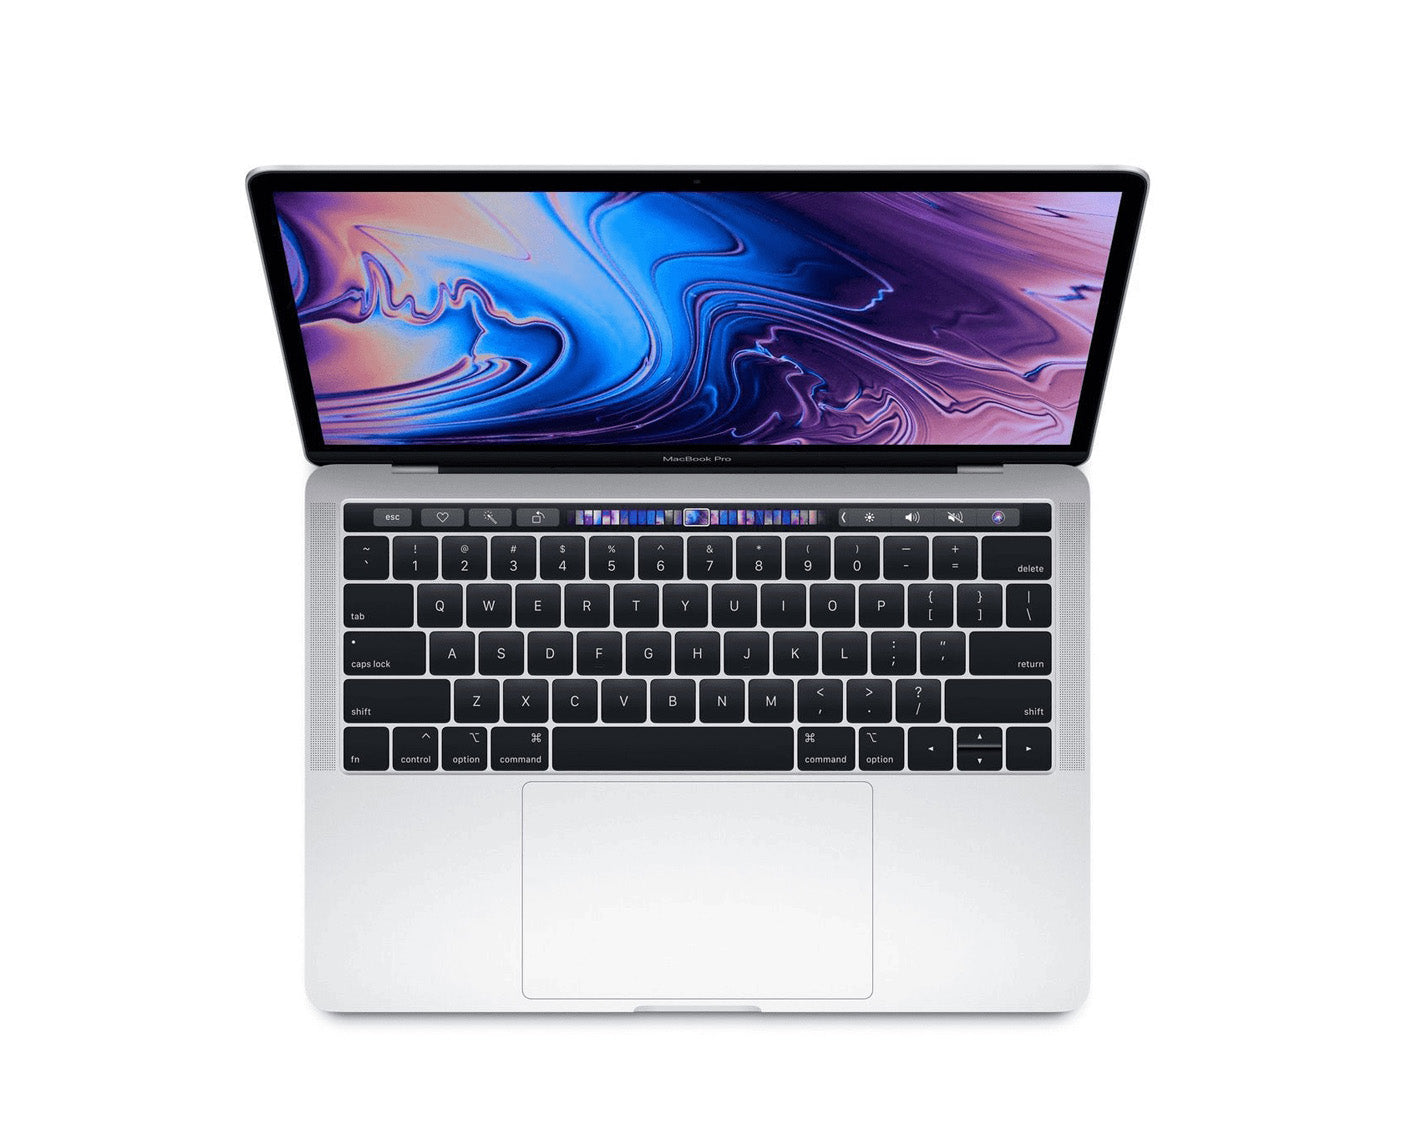 Macbook Pro 13-inch (Touchbar | four thunderbolt 3 ports) - 2019 - i5 - Silver